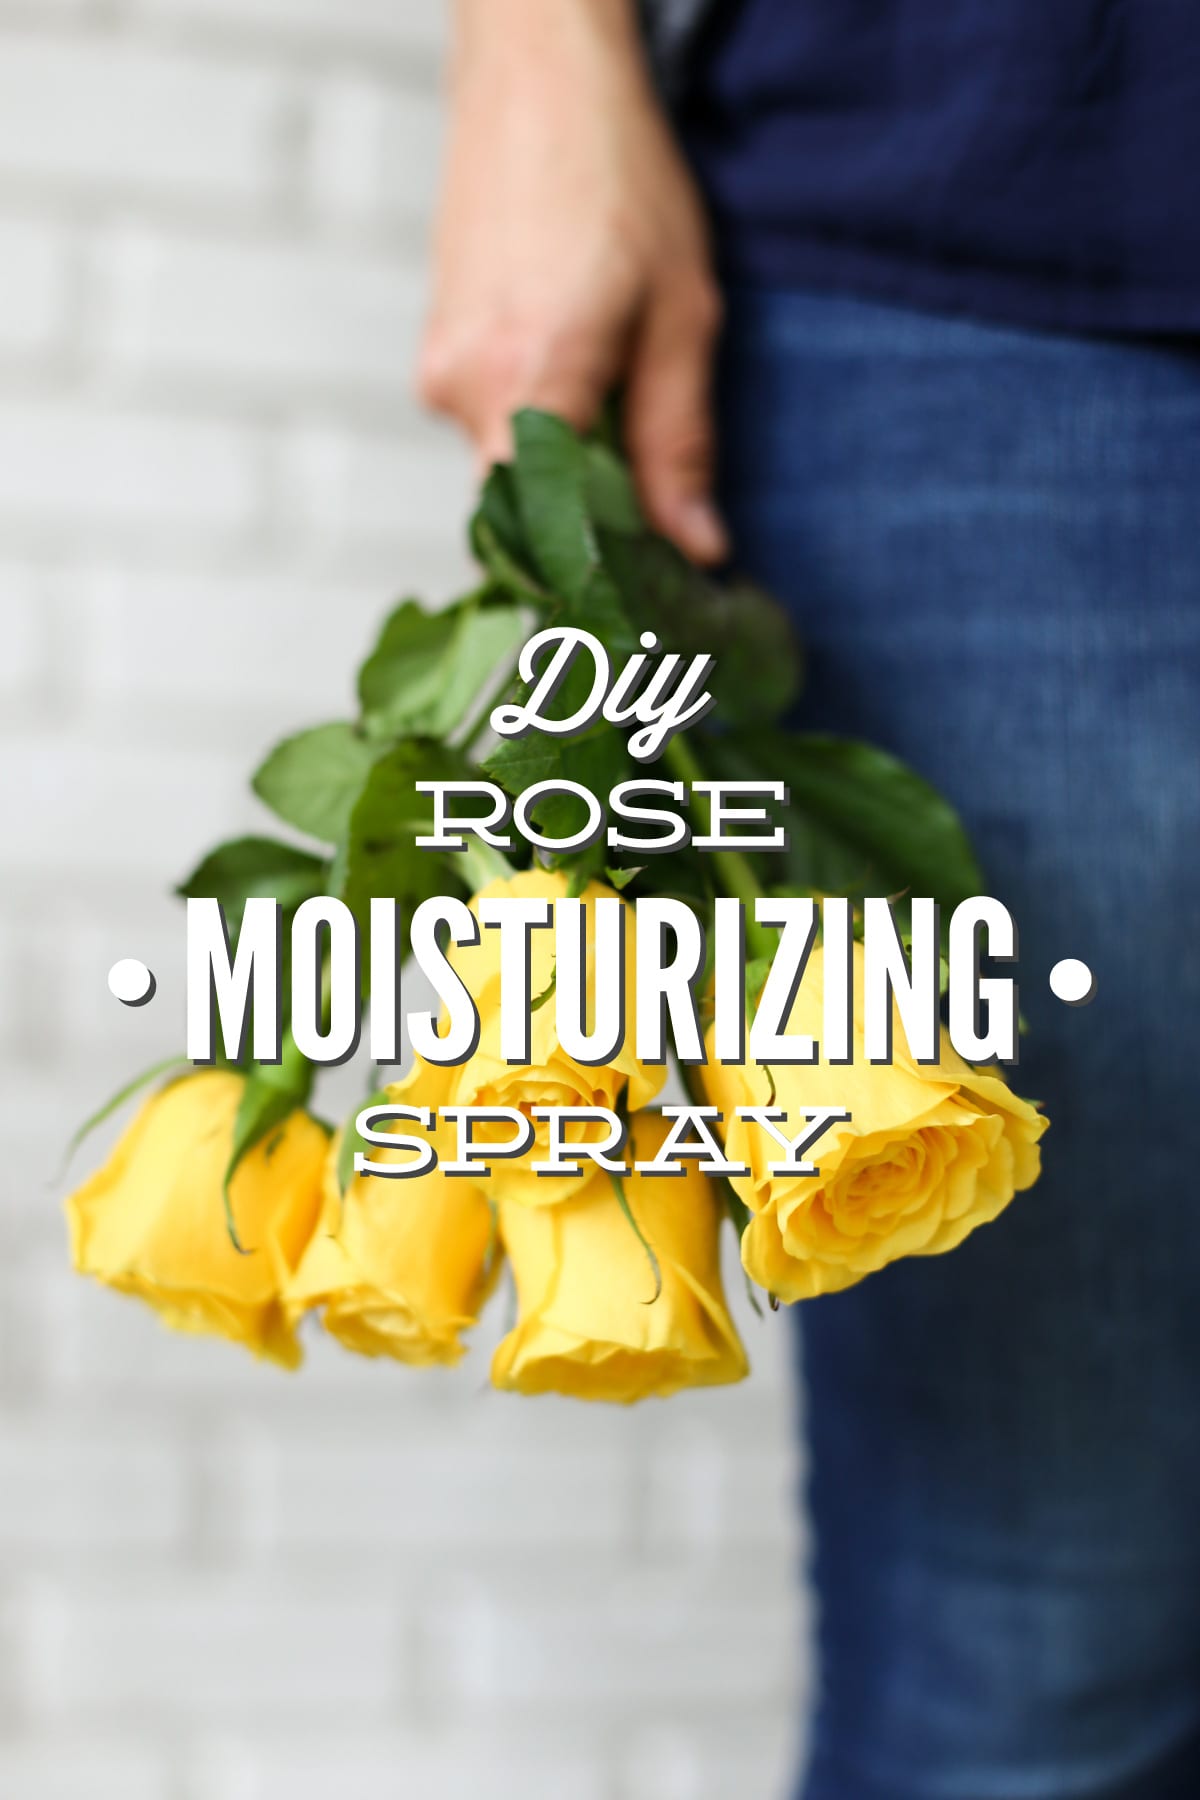 DIY Rose Moisturizing Spray (Toner or Skin Freshener)